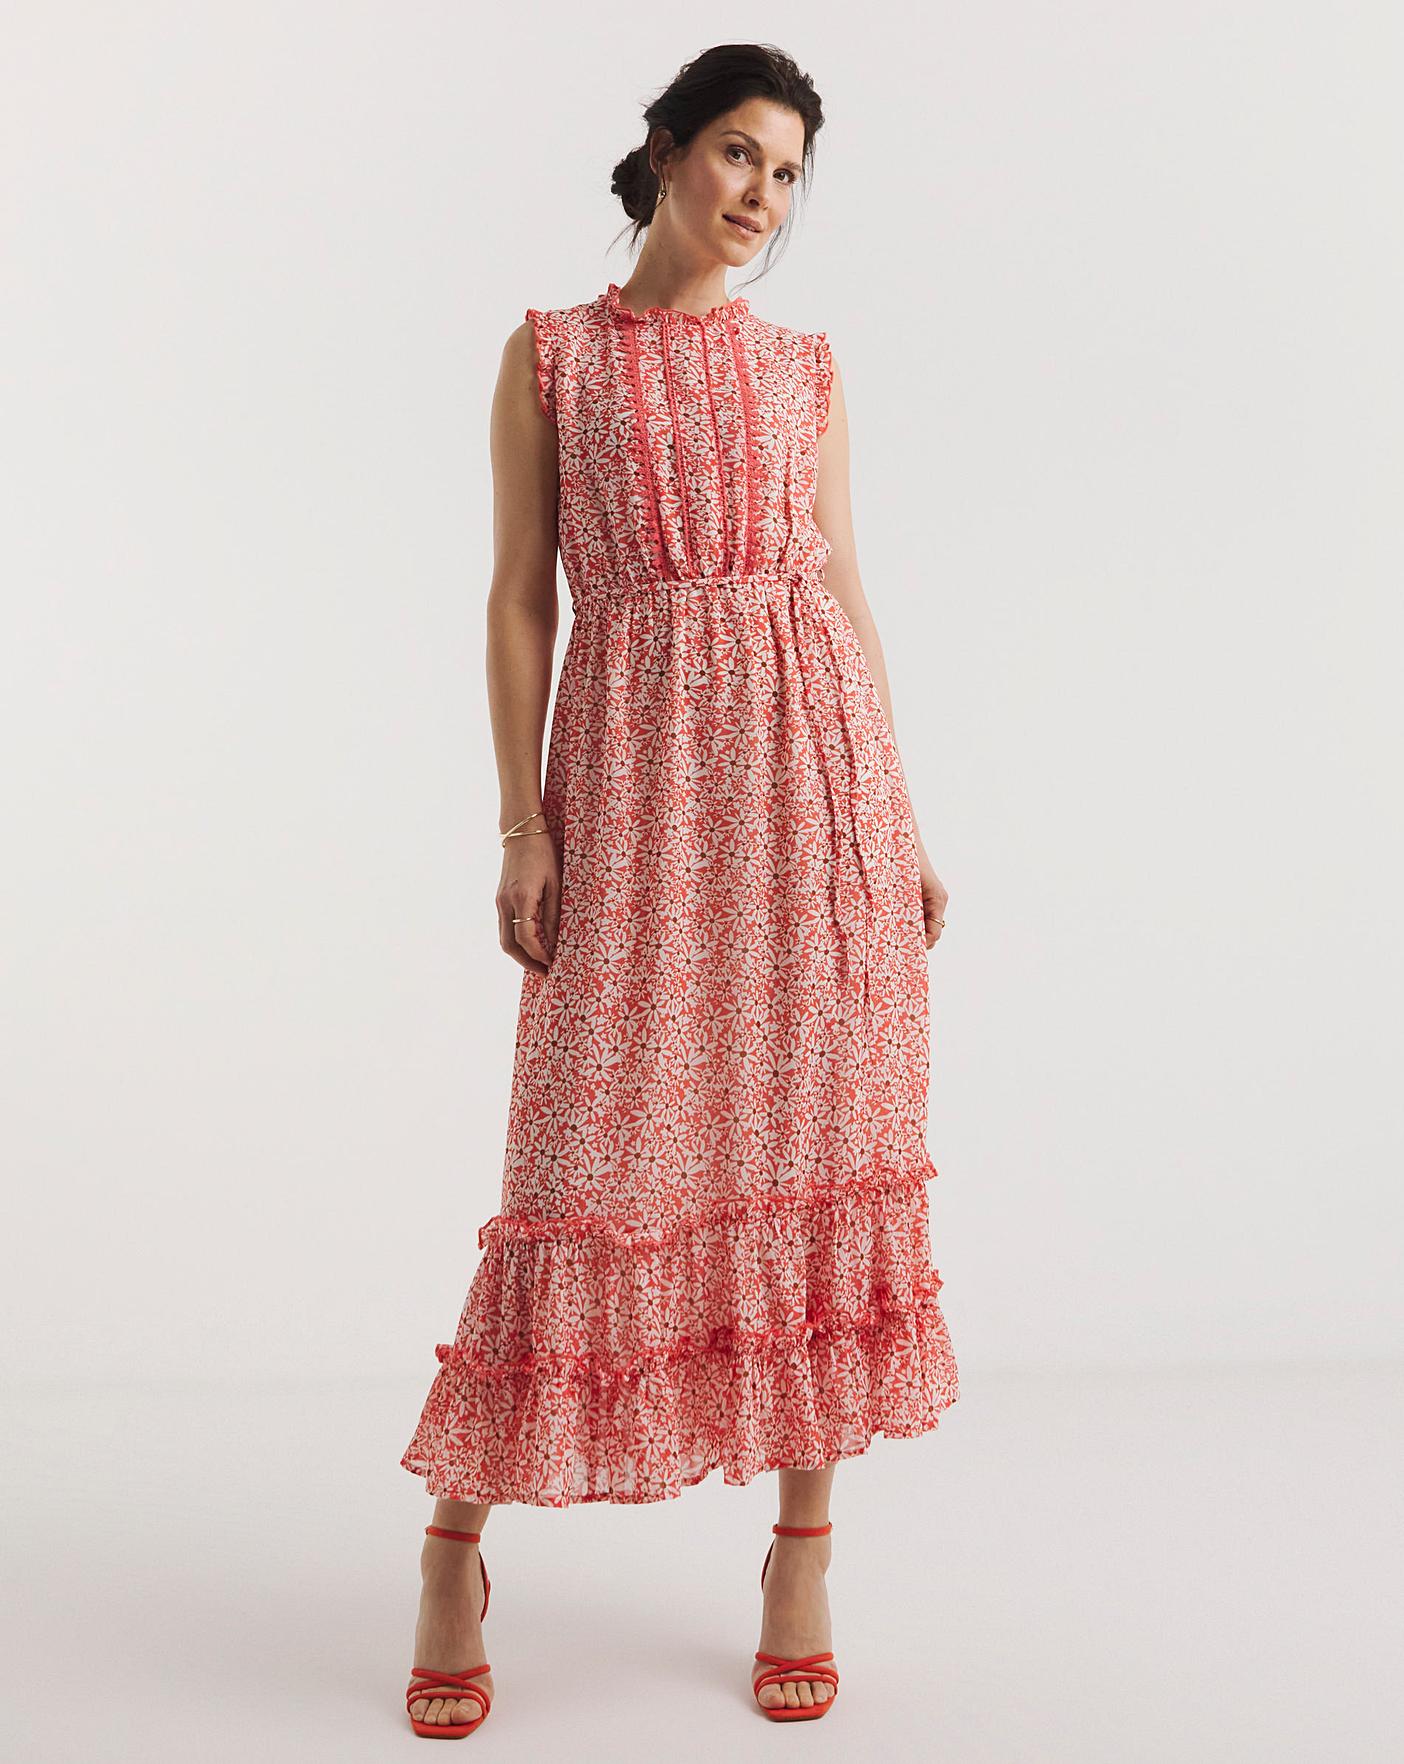 Georgette Dress With Lace Trim | Fashion World